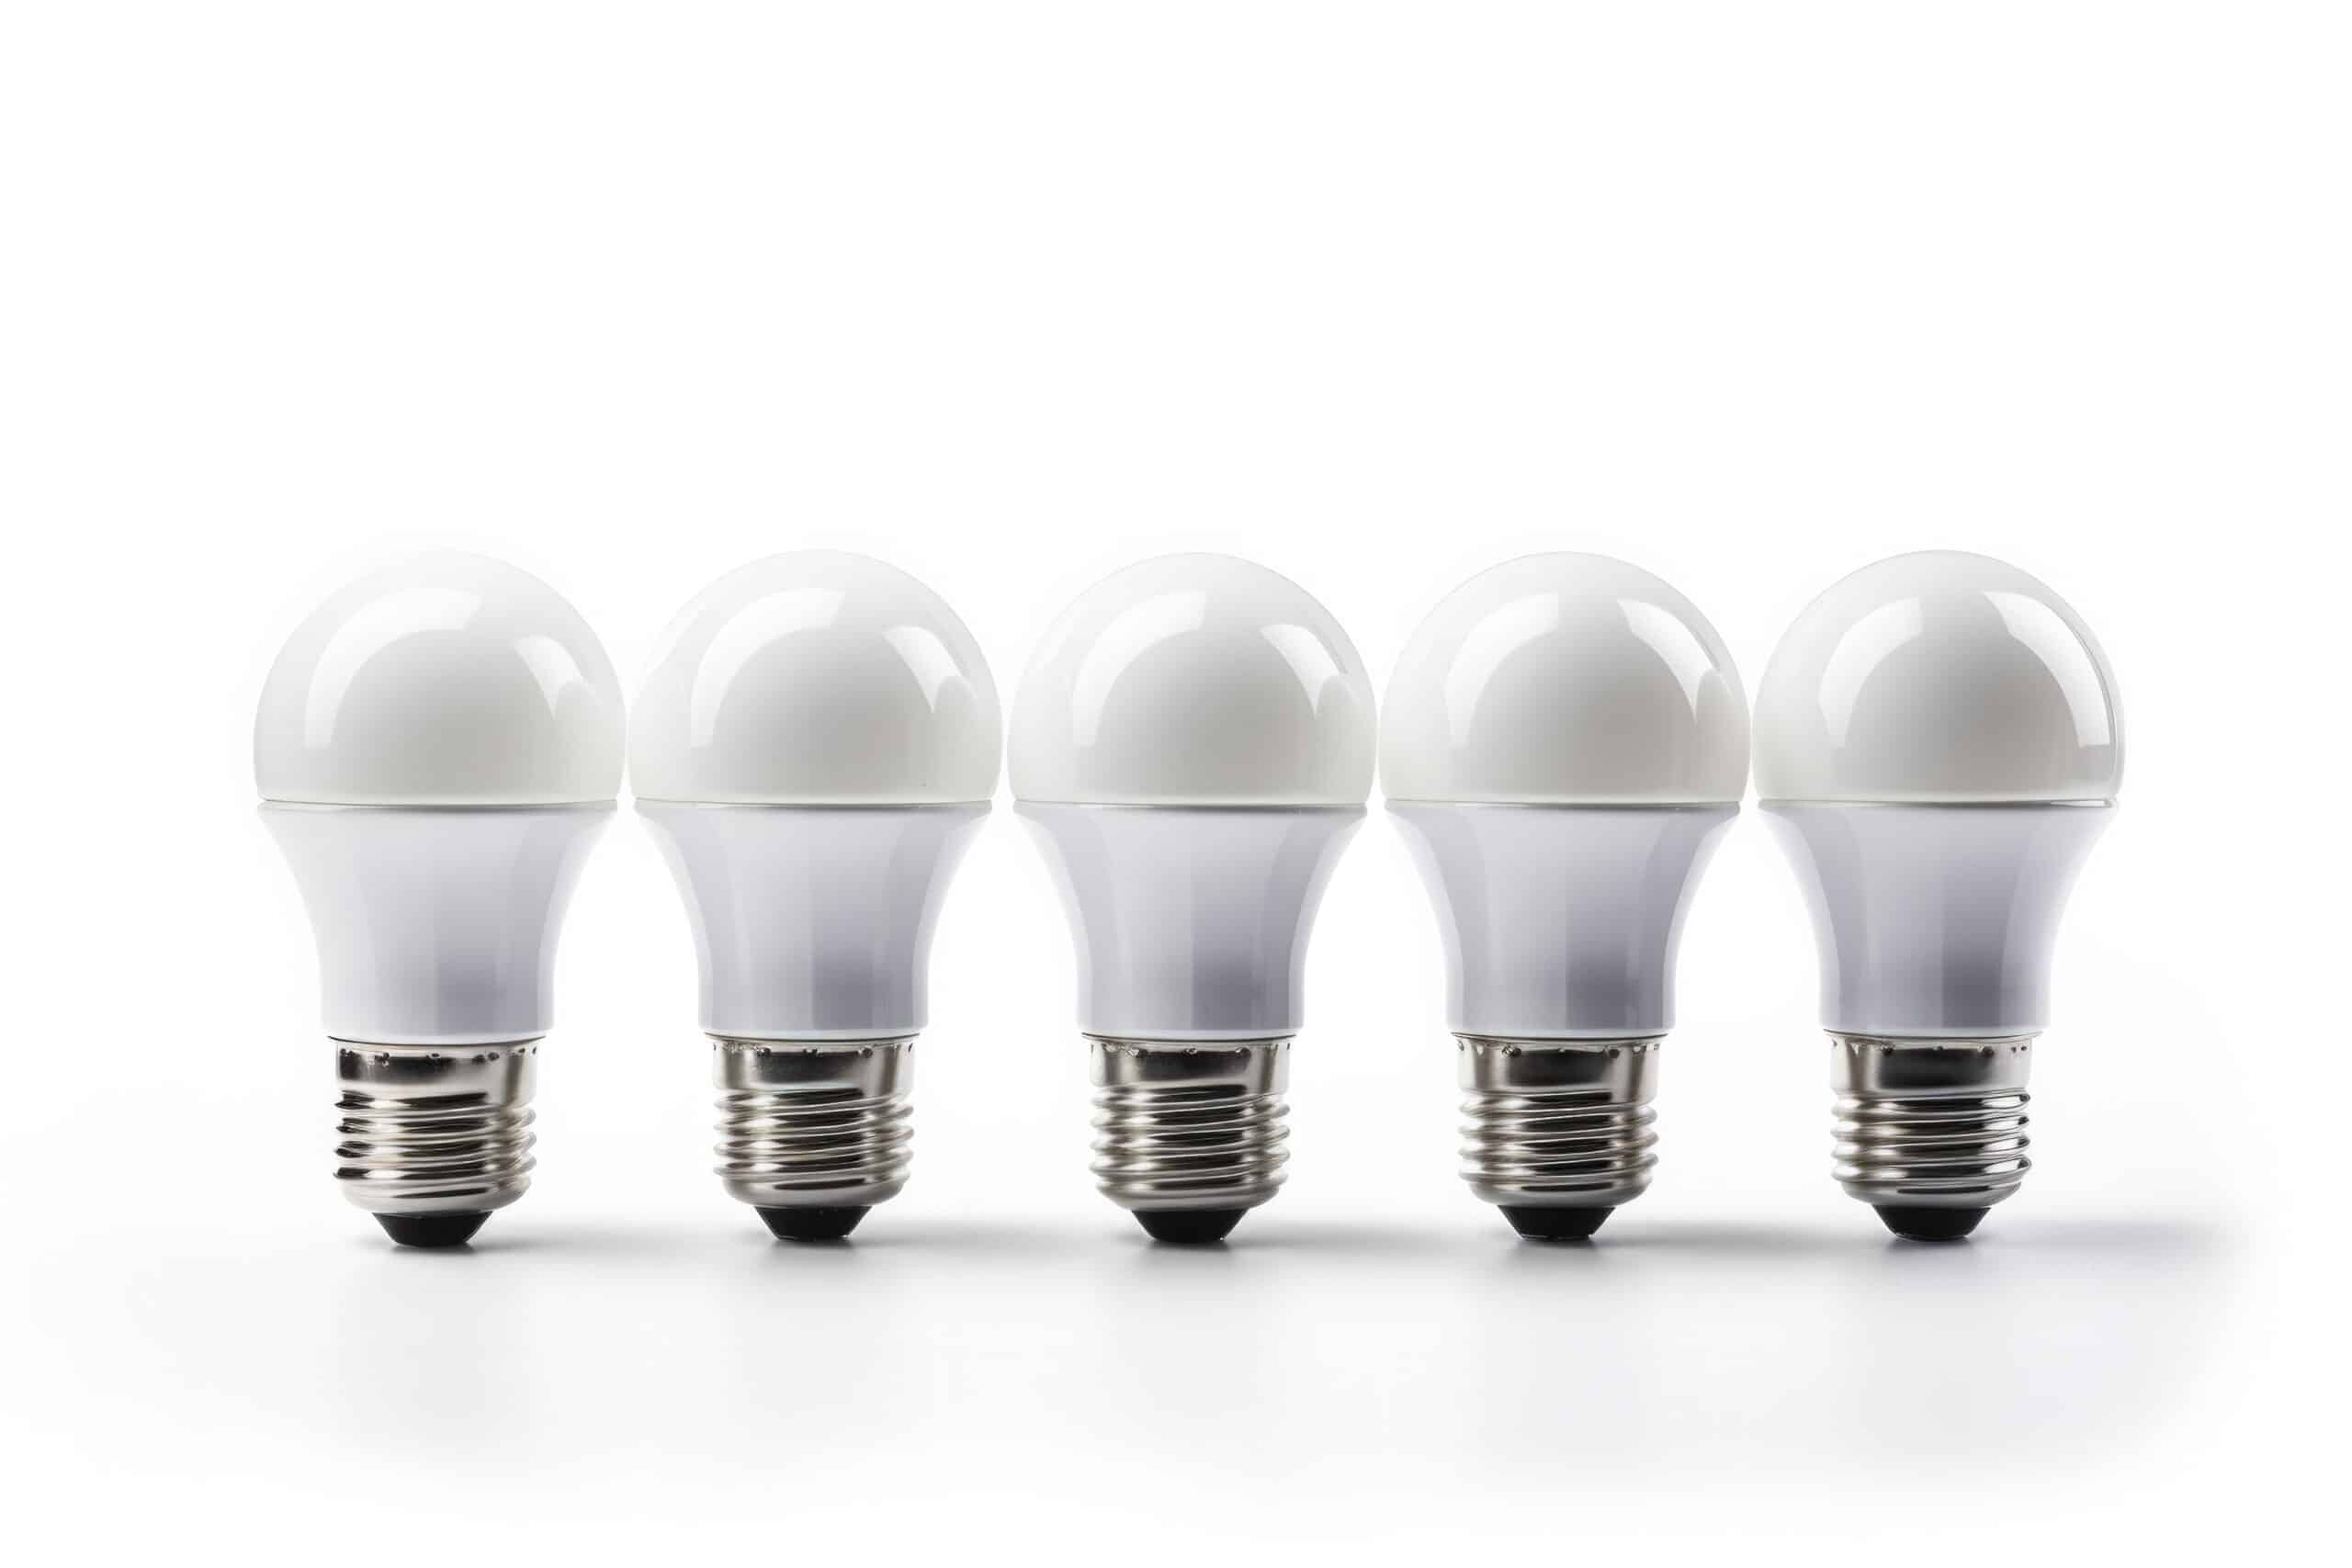 www.appr.com : Do Smart Light Bulbs Use Electricity When Off?